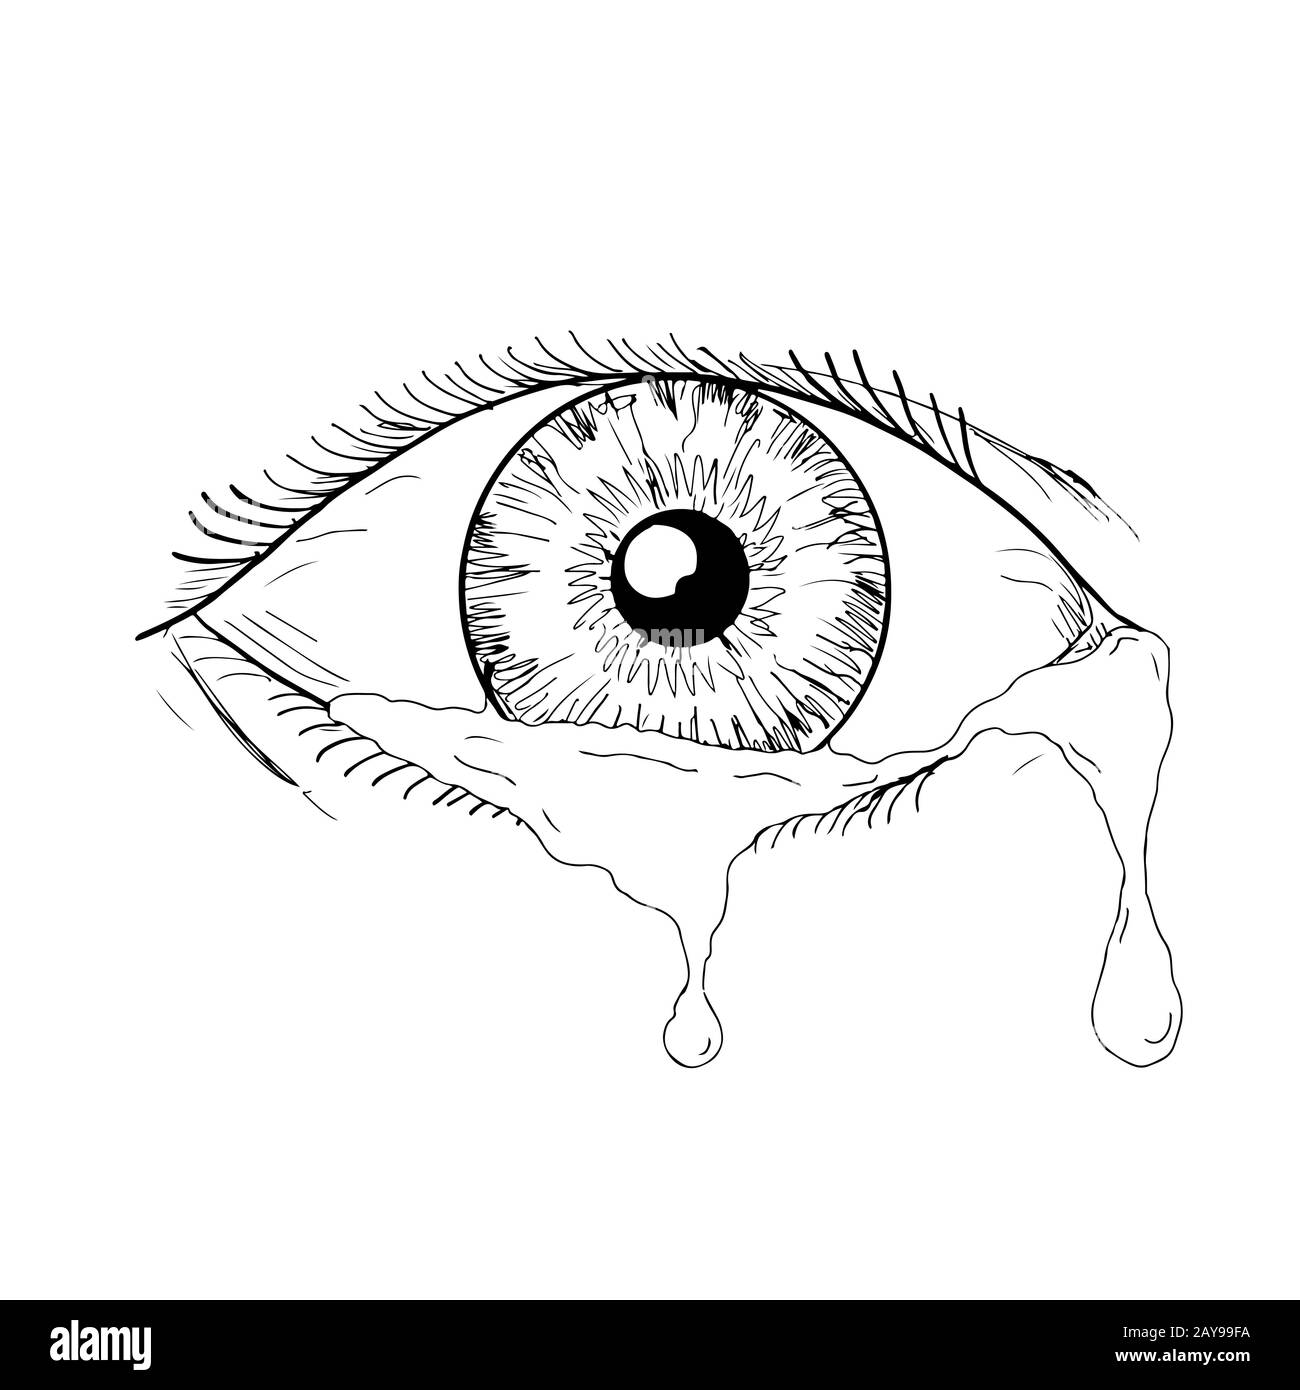 Human Eye Crying Tears Flowing Drawing Stock Photo